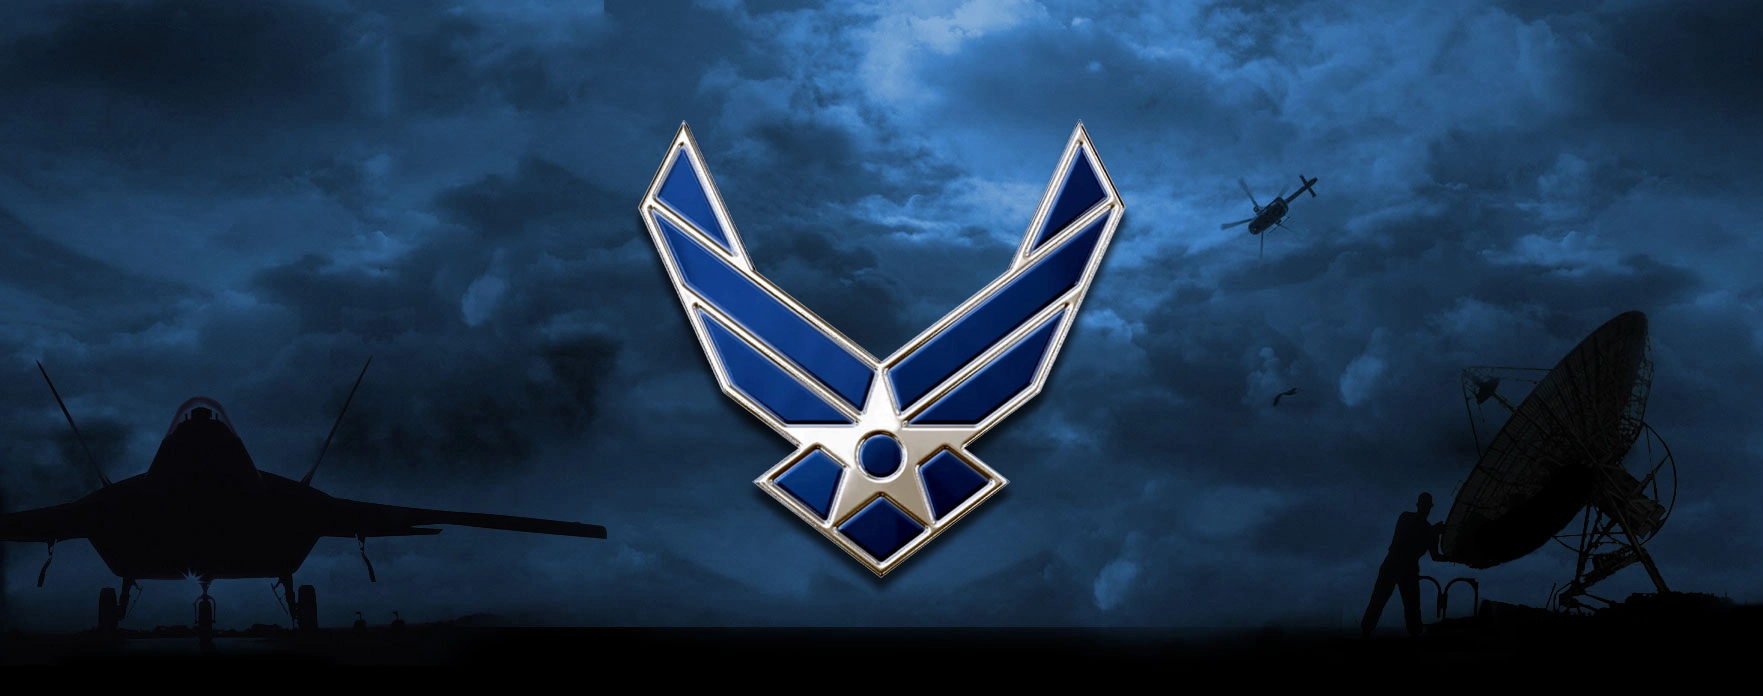 U.S. Air Force Images